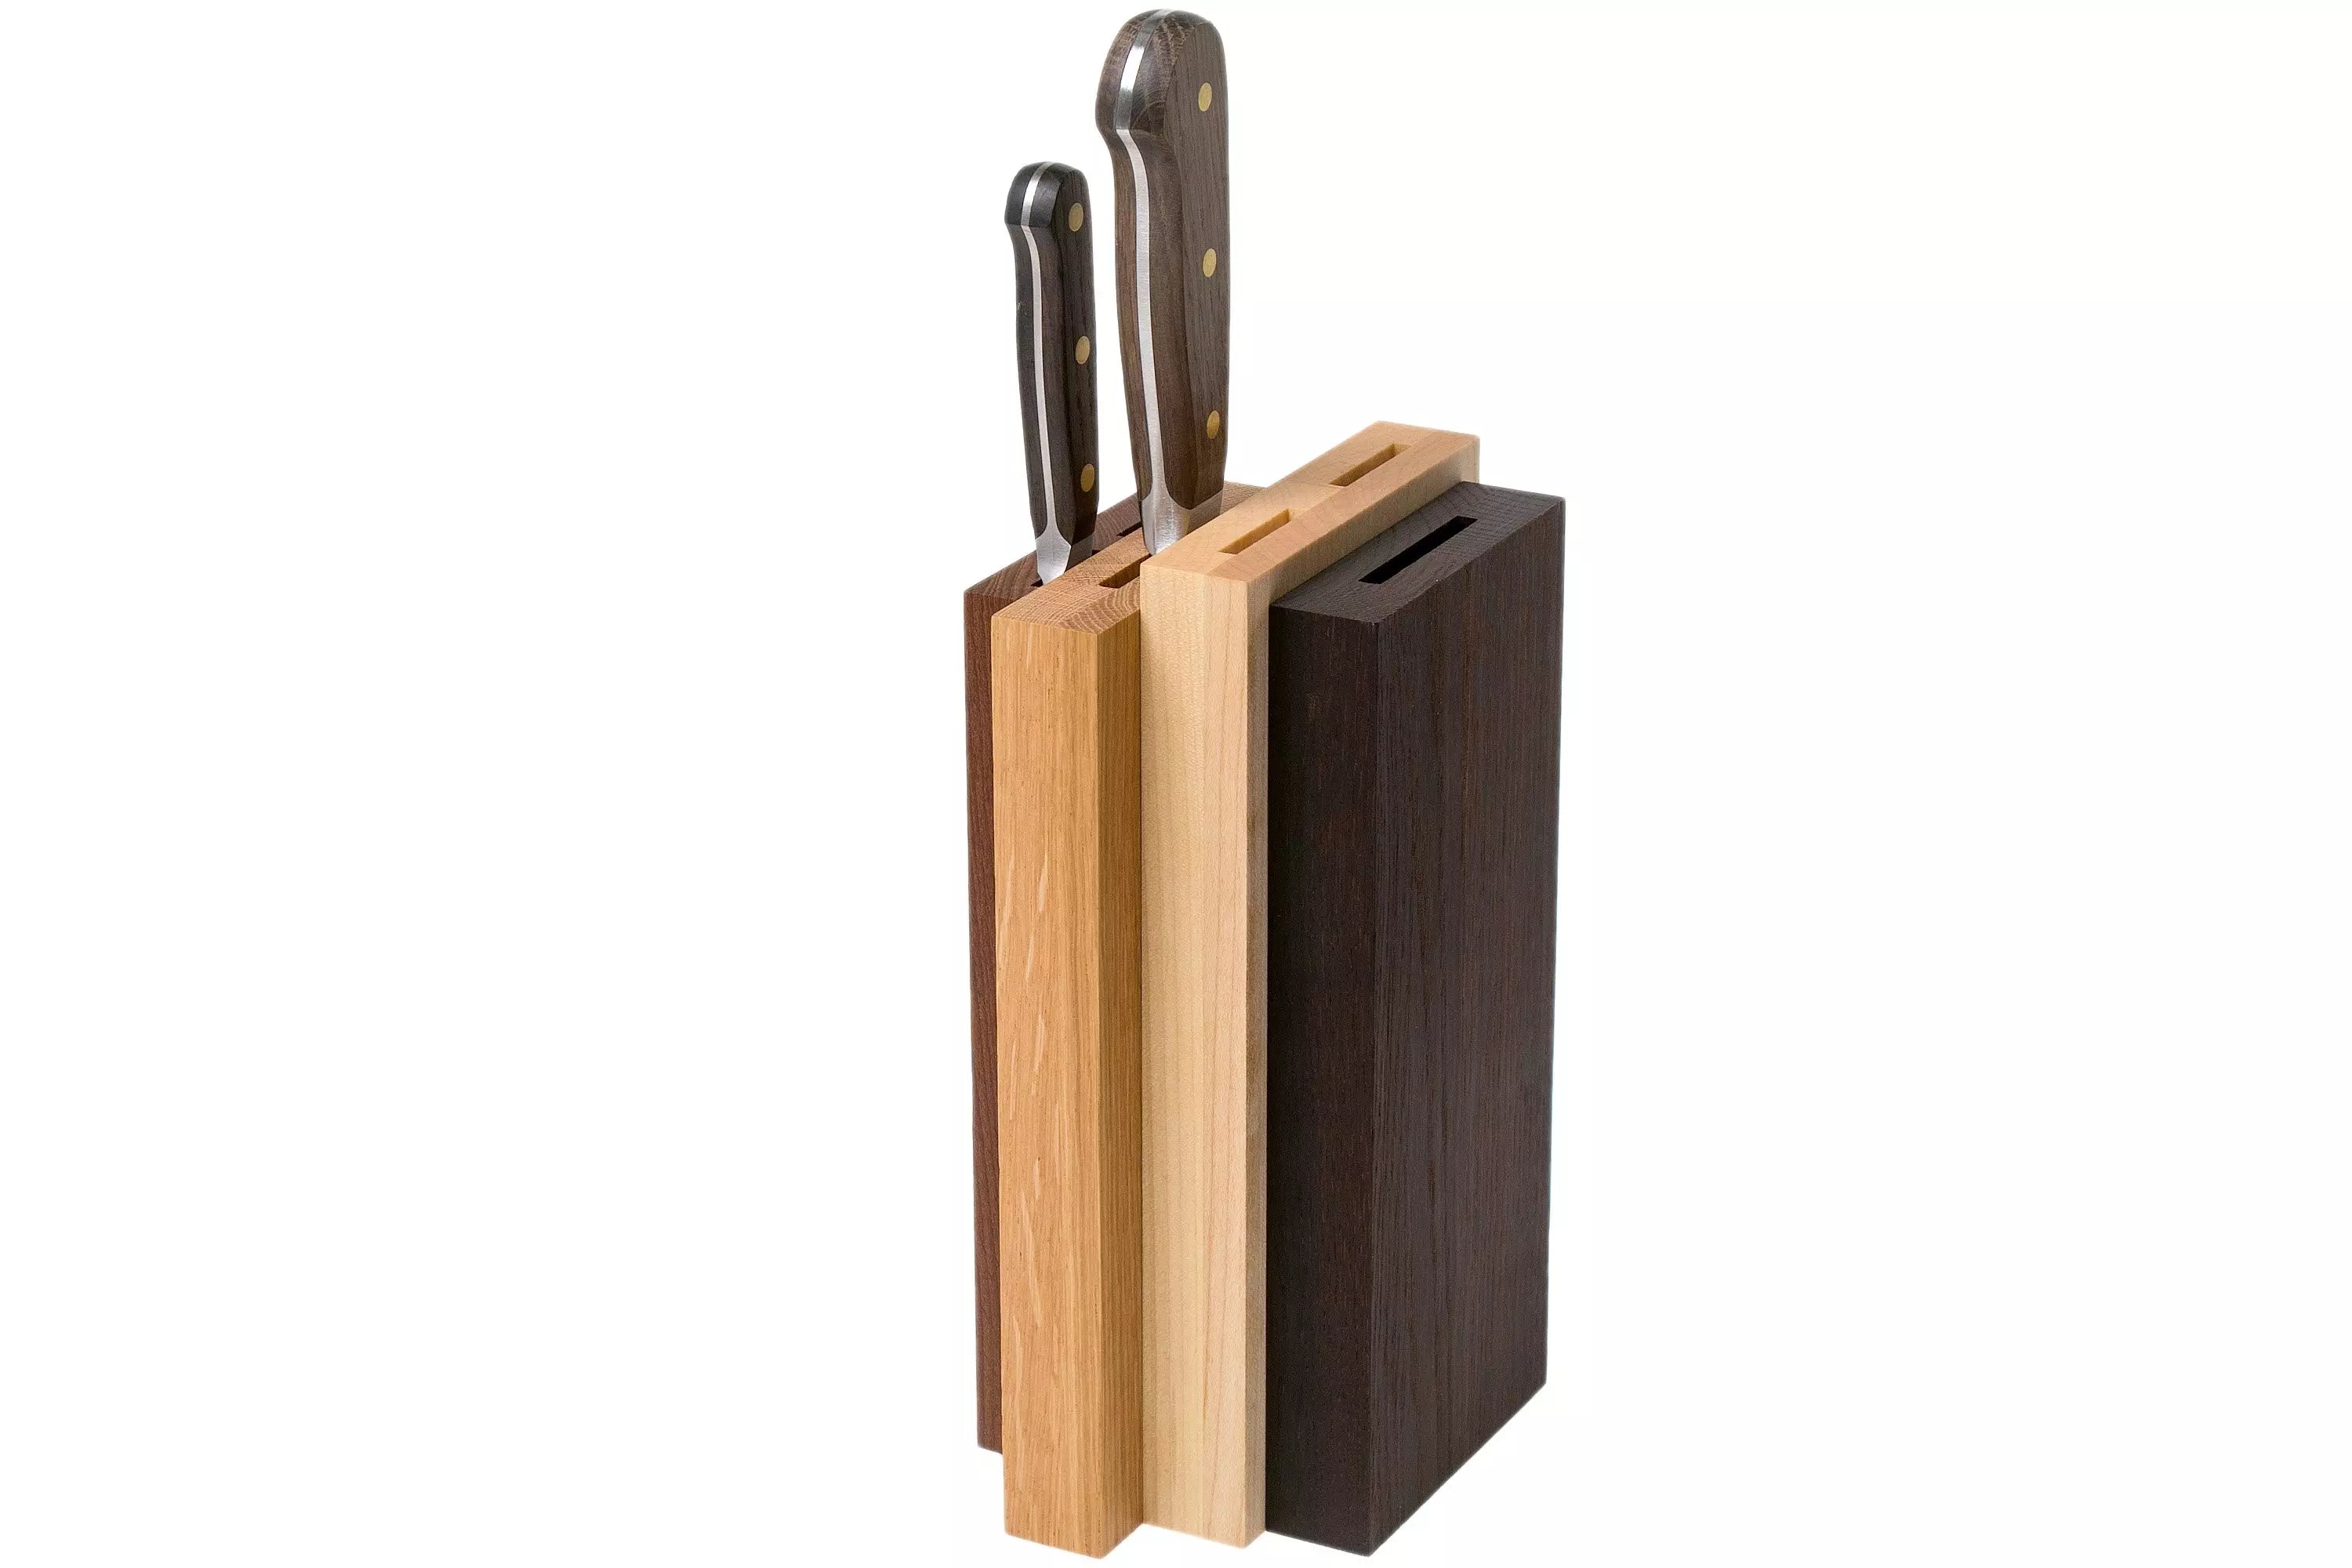 Wusthof Crafter Knife block 3pcs Set 1090870202